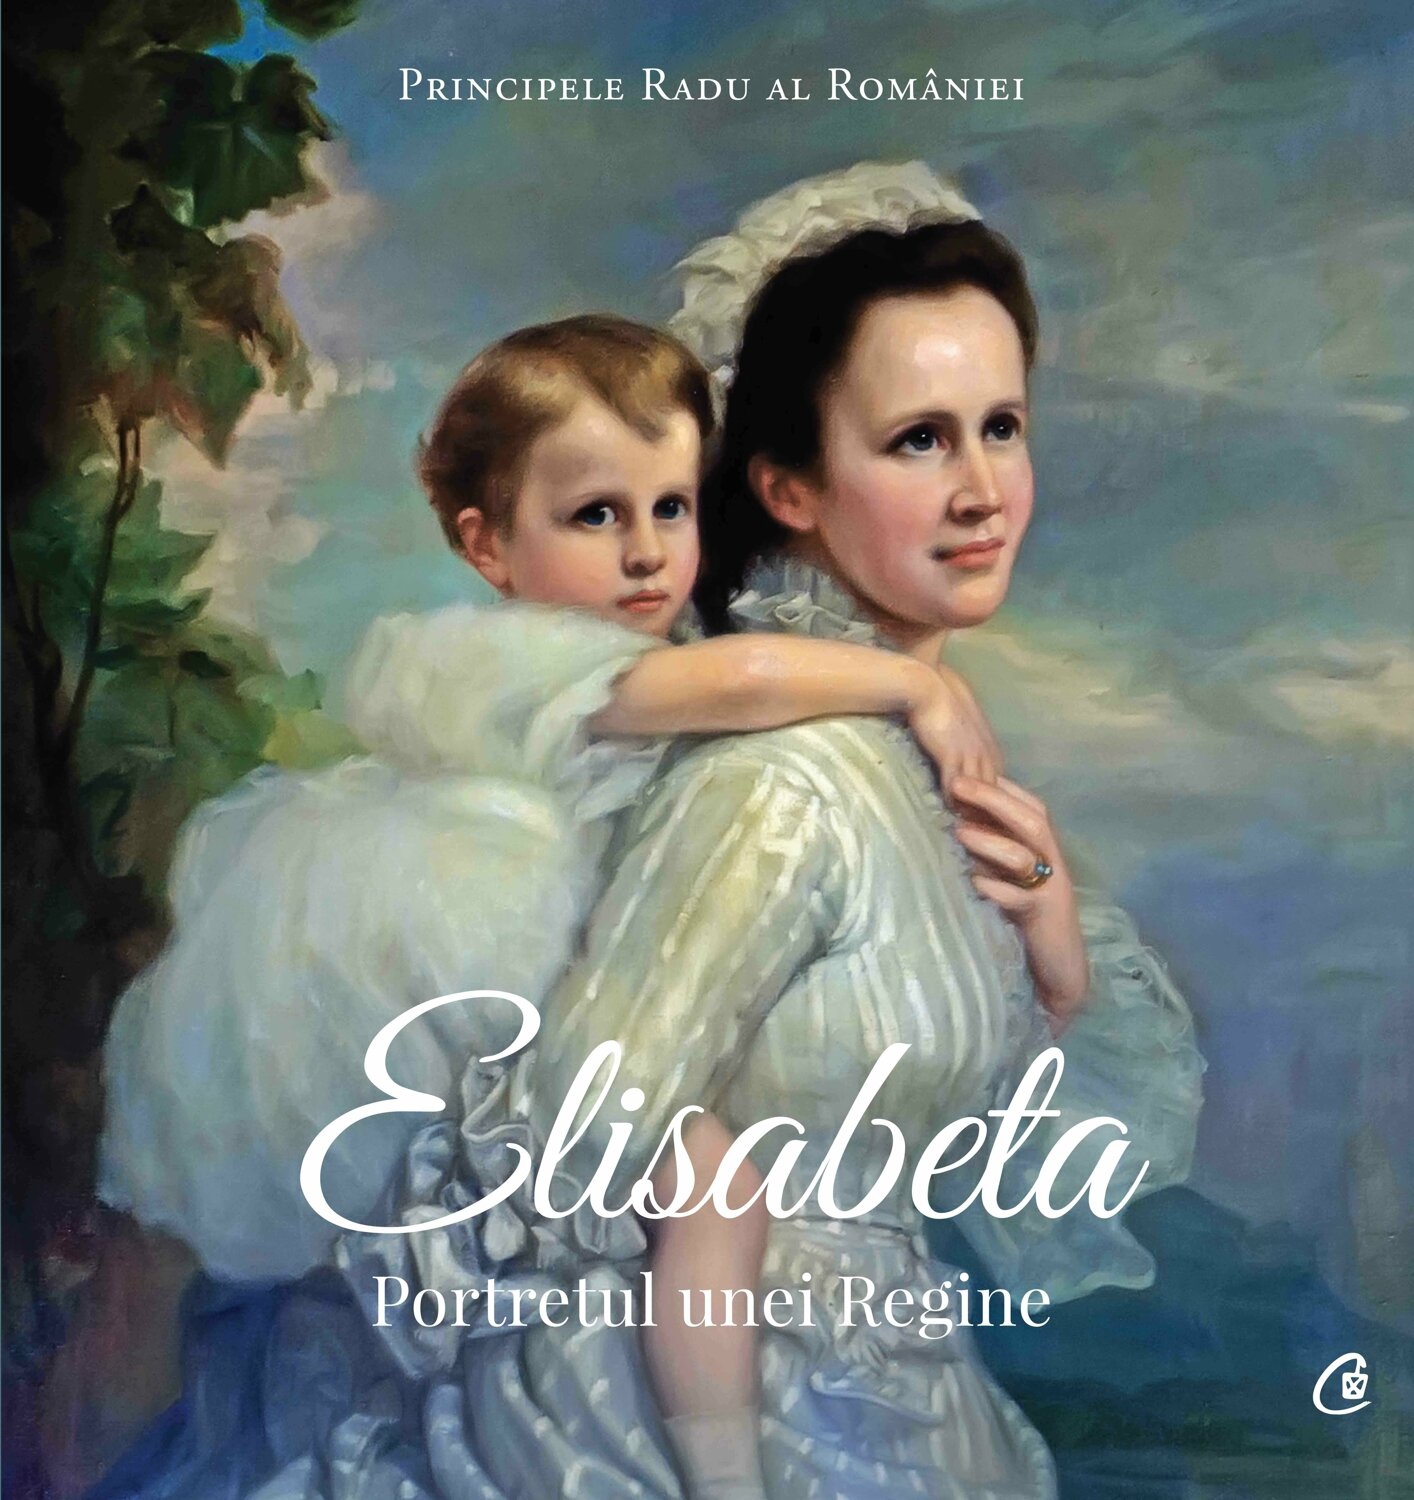 Elisabeta. Portretul unei Regine | Principele Radu Al Romaniei carturesti.ro poza bestsellers.ro